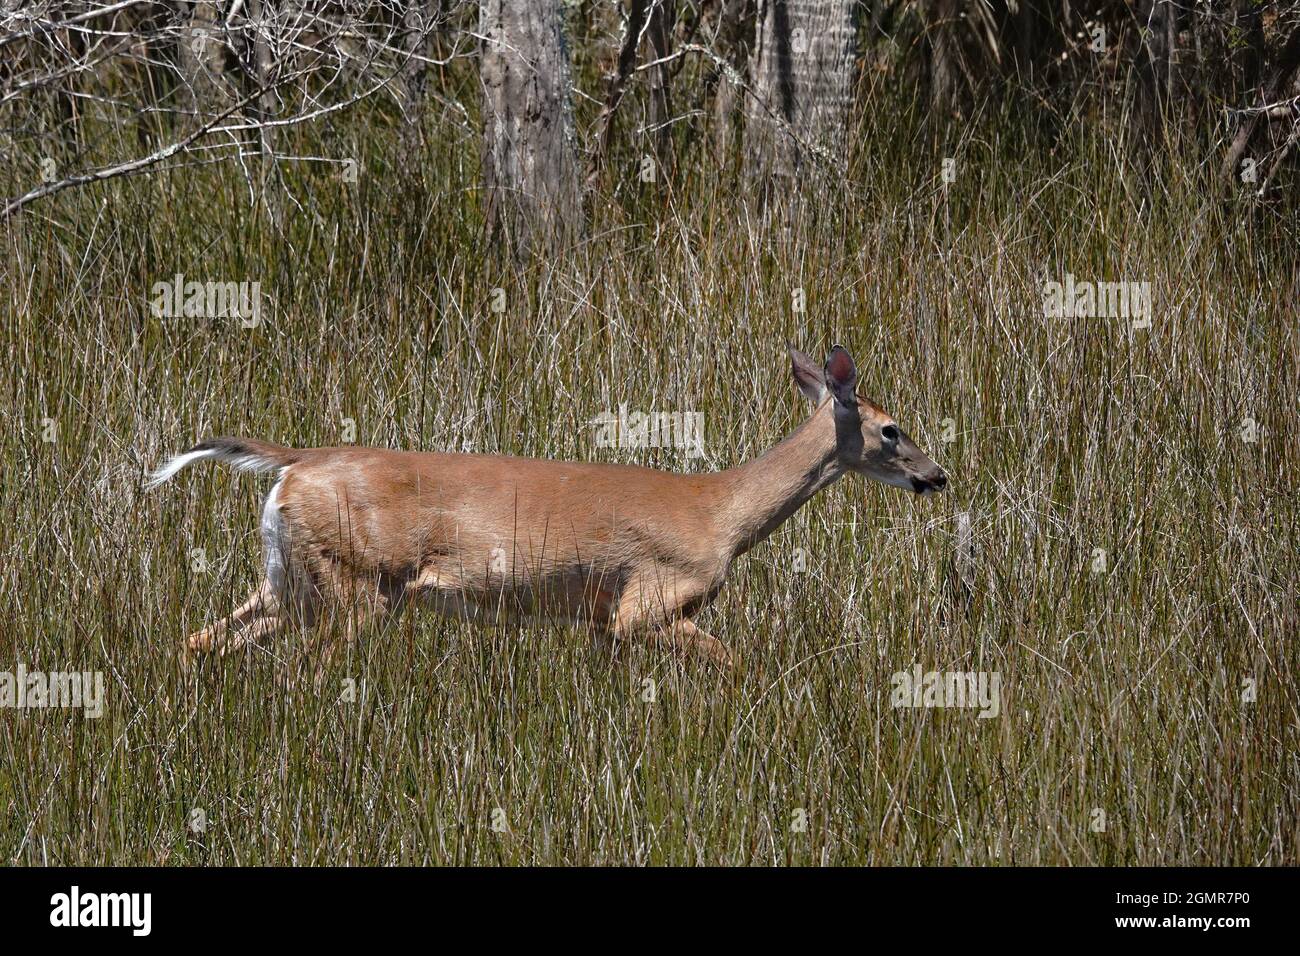 A White tailed deer runs through spartina grass along the salt marsh in Mount Pleasant, South Carolina. Stock Photo